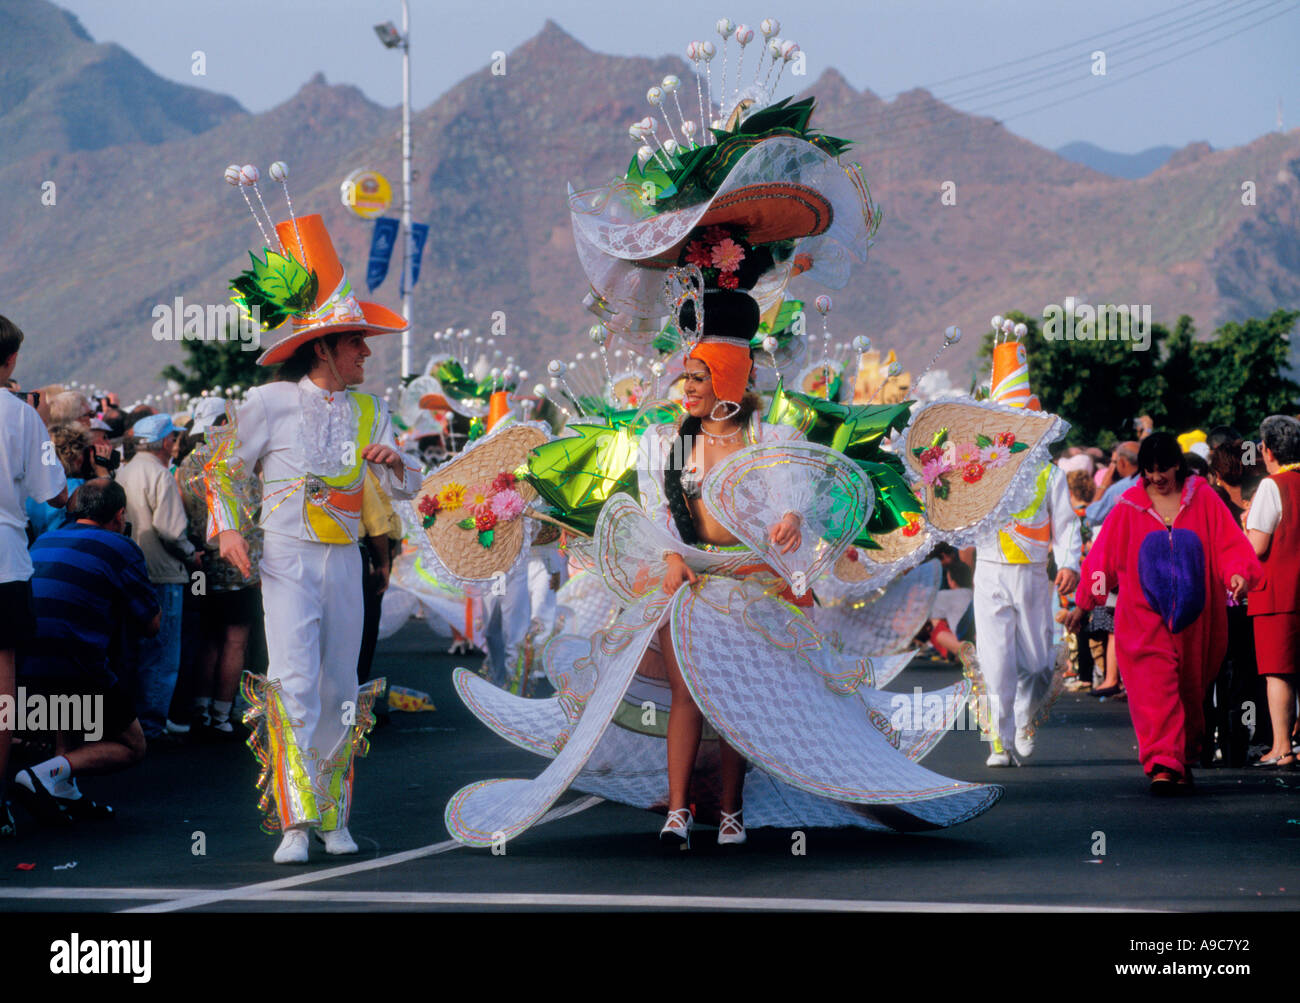 Spain Canary islands Tenerife island Santa Cruz Carnival festival with colorful costume procession on the street Stock Photo